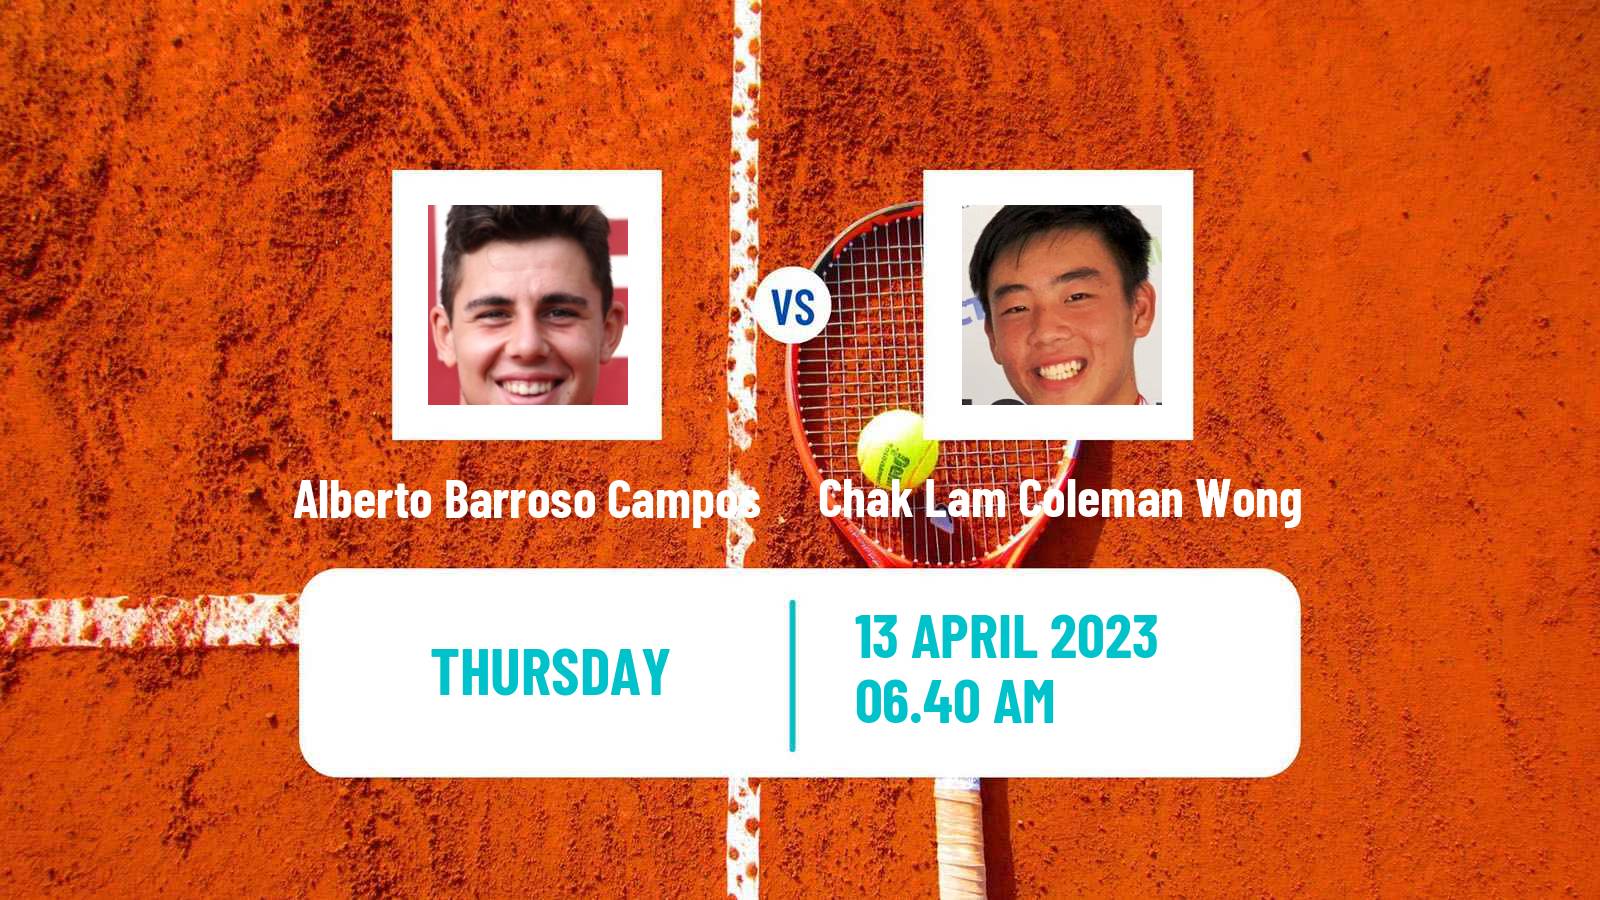 Tennis ITF Tournaments Alberto Barroso Campos - Chak Lam Coleman Wong